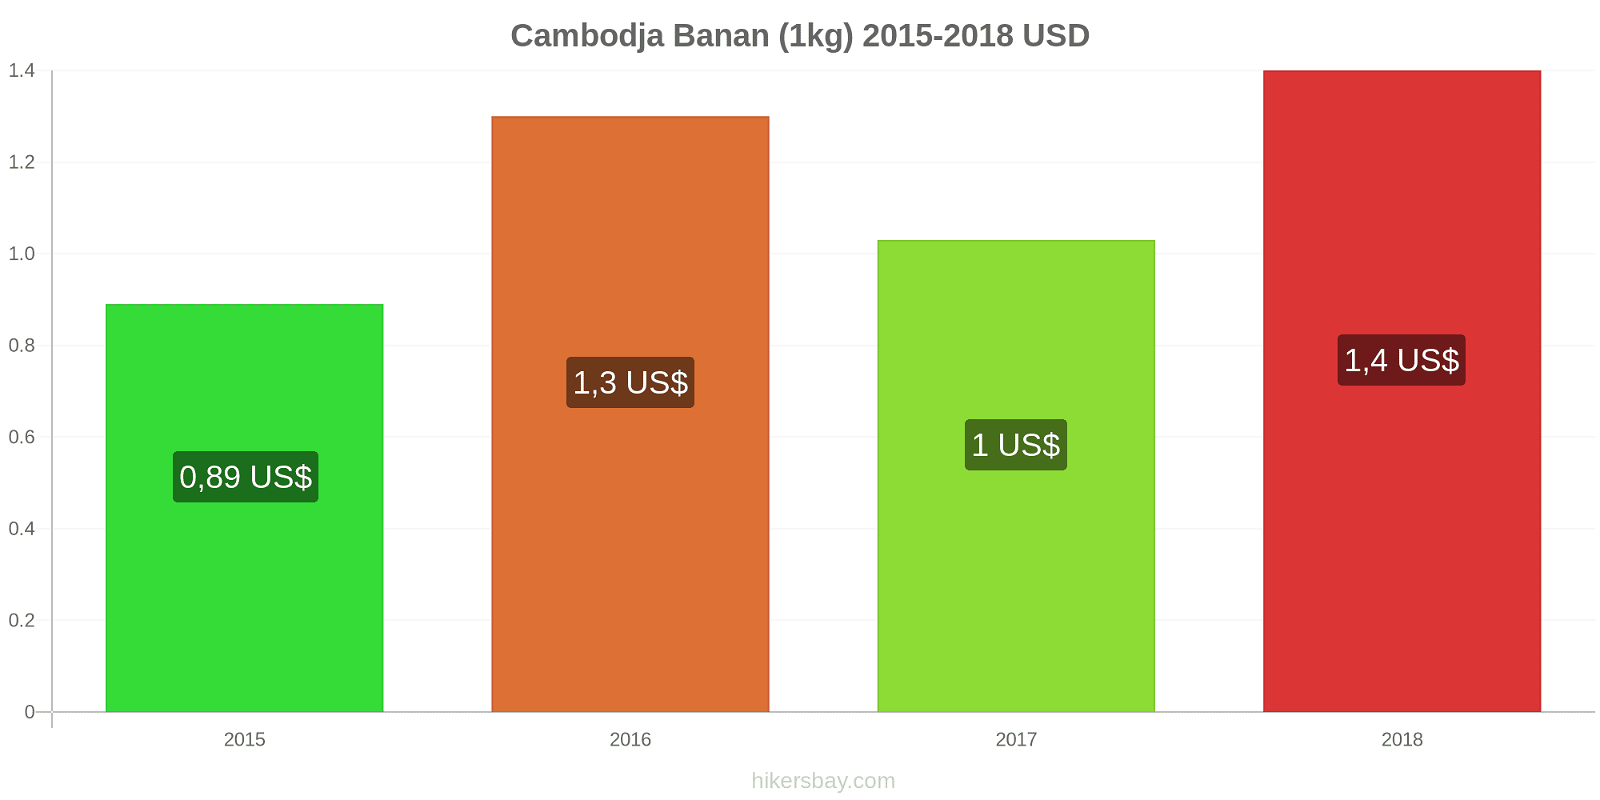 Cambodja prisændringer Bananer (1kg) hikersbay.com